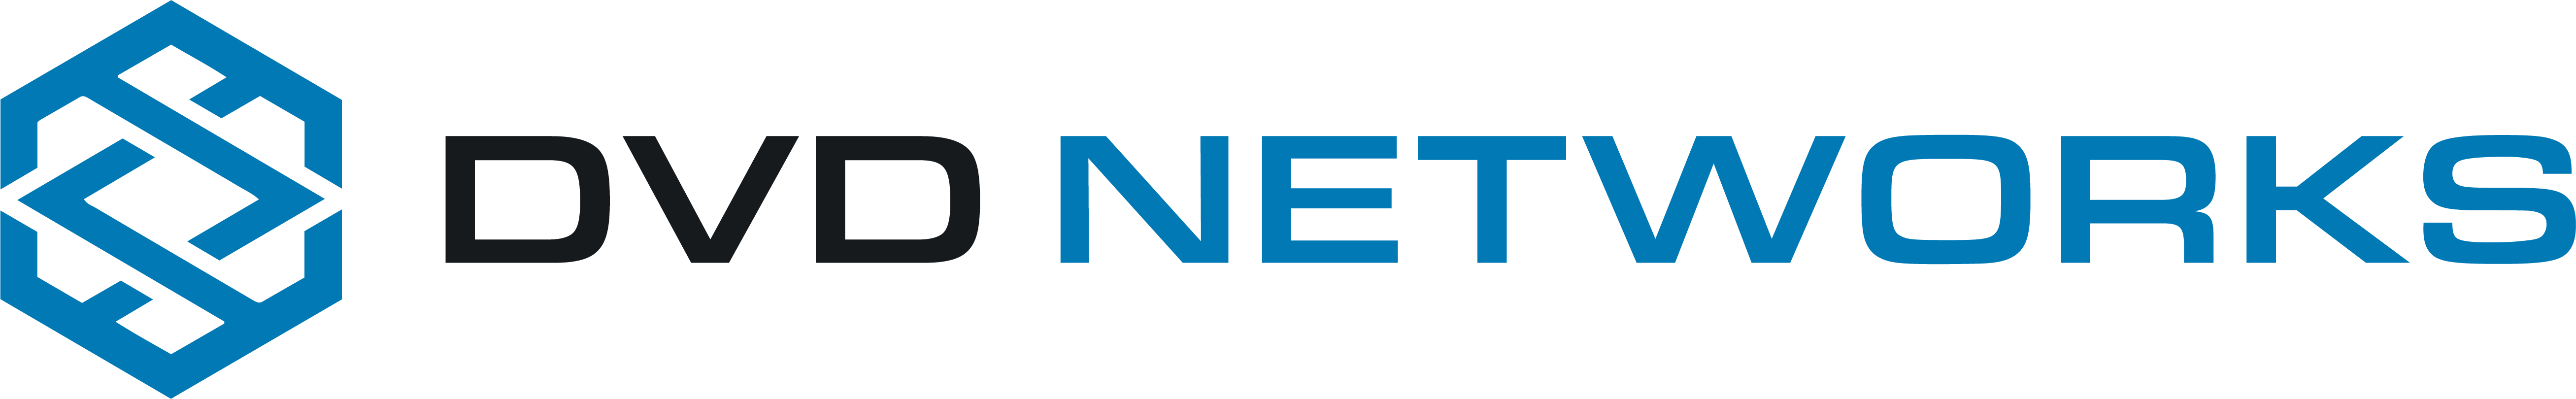 DVD Networks logo